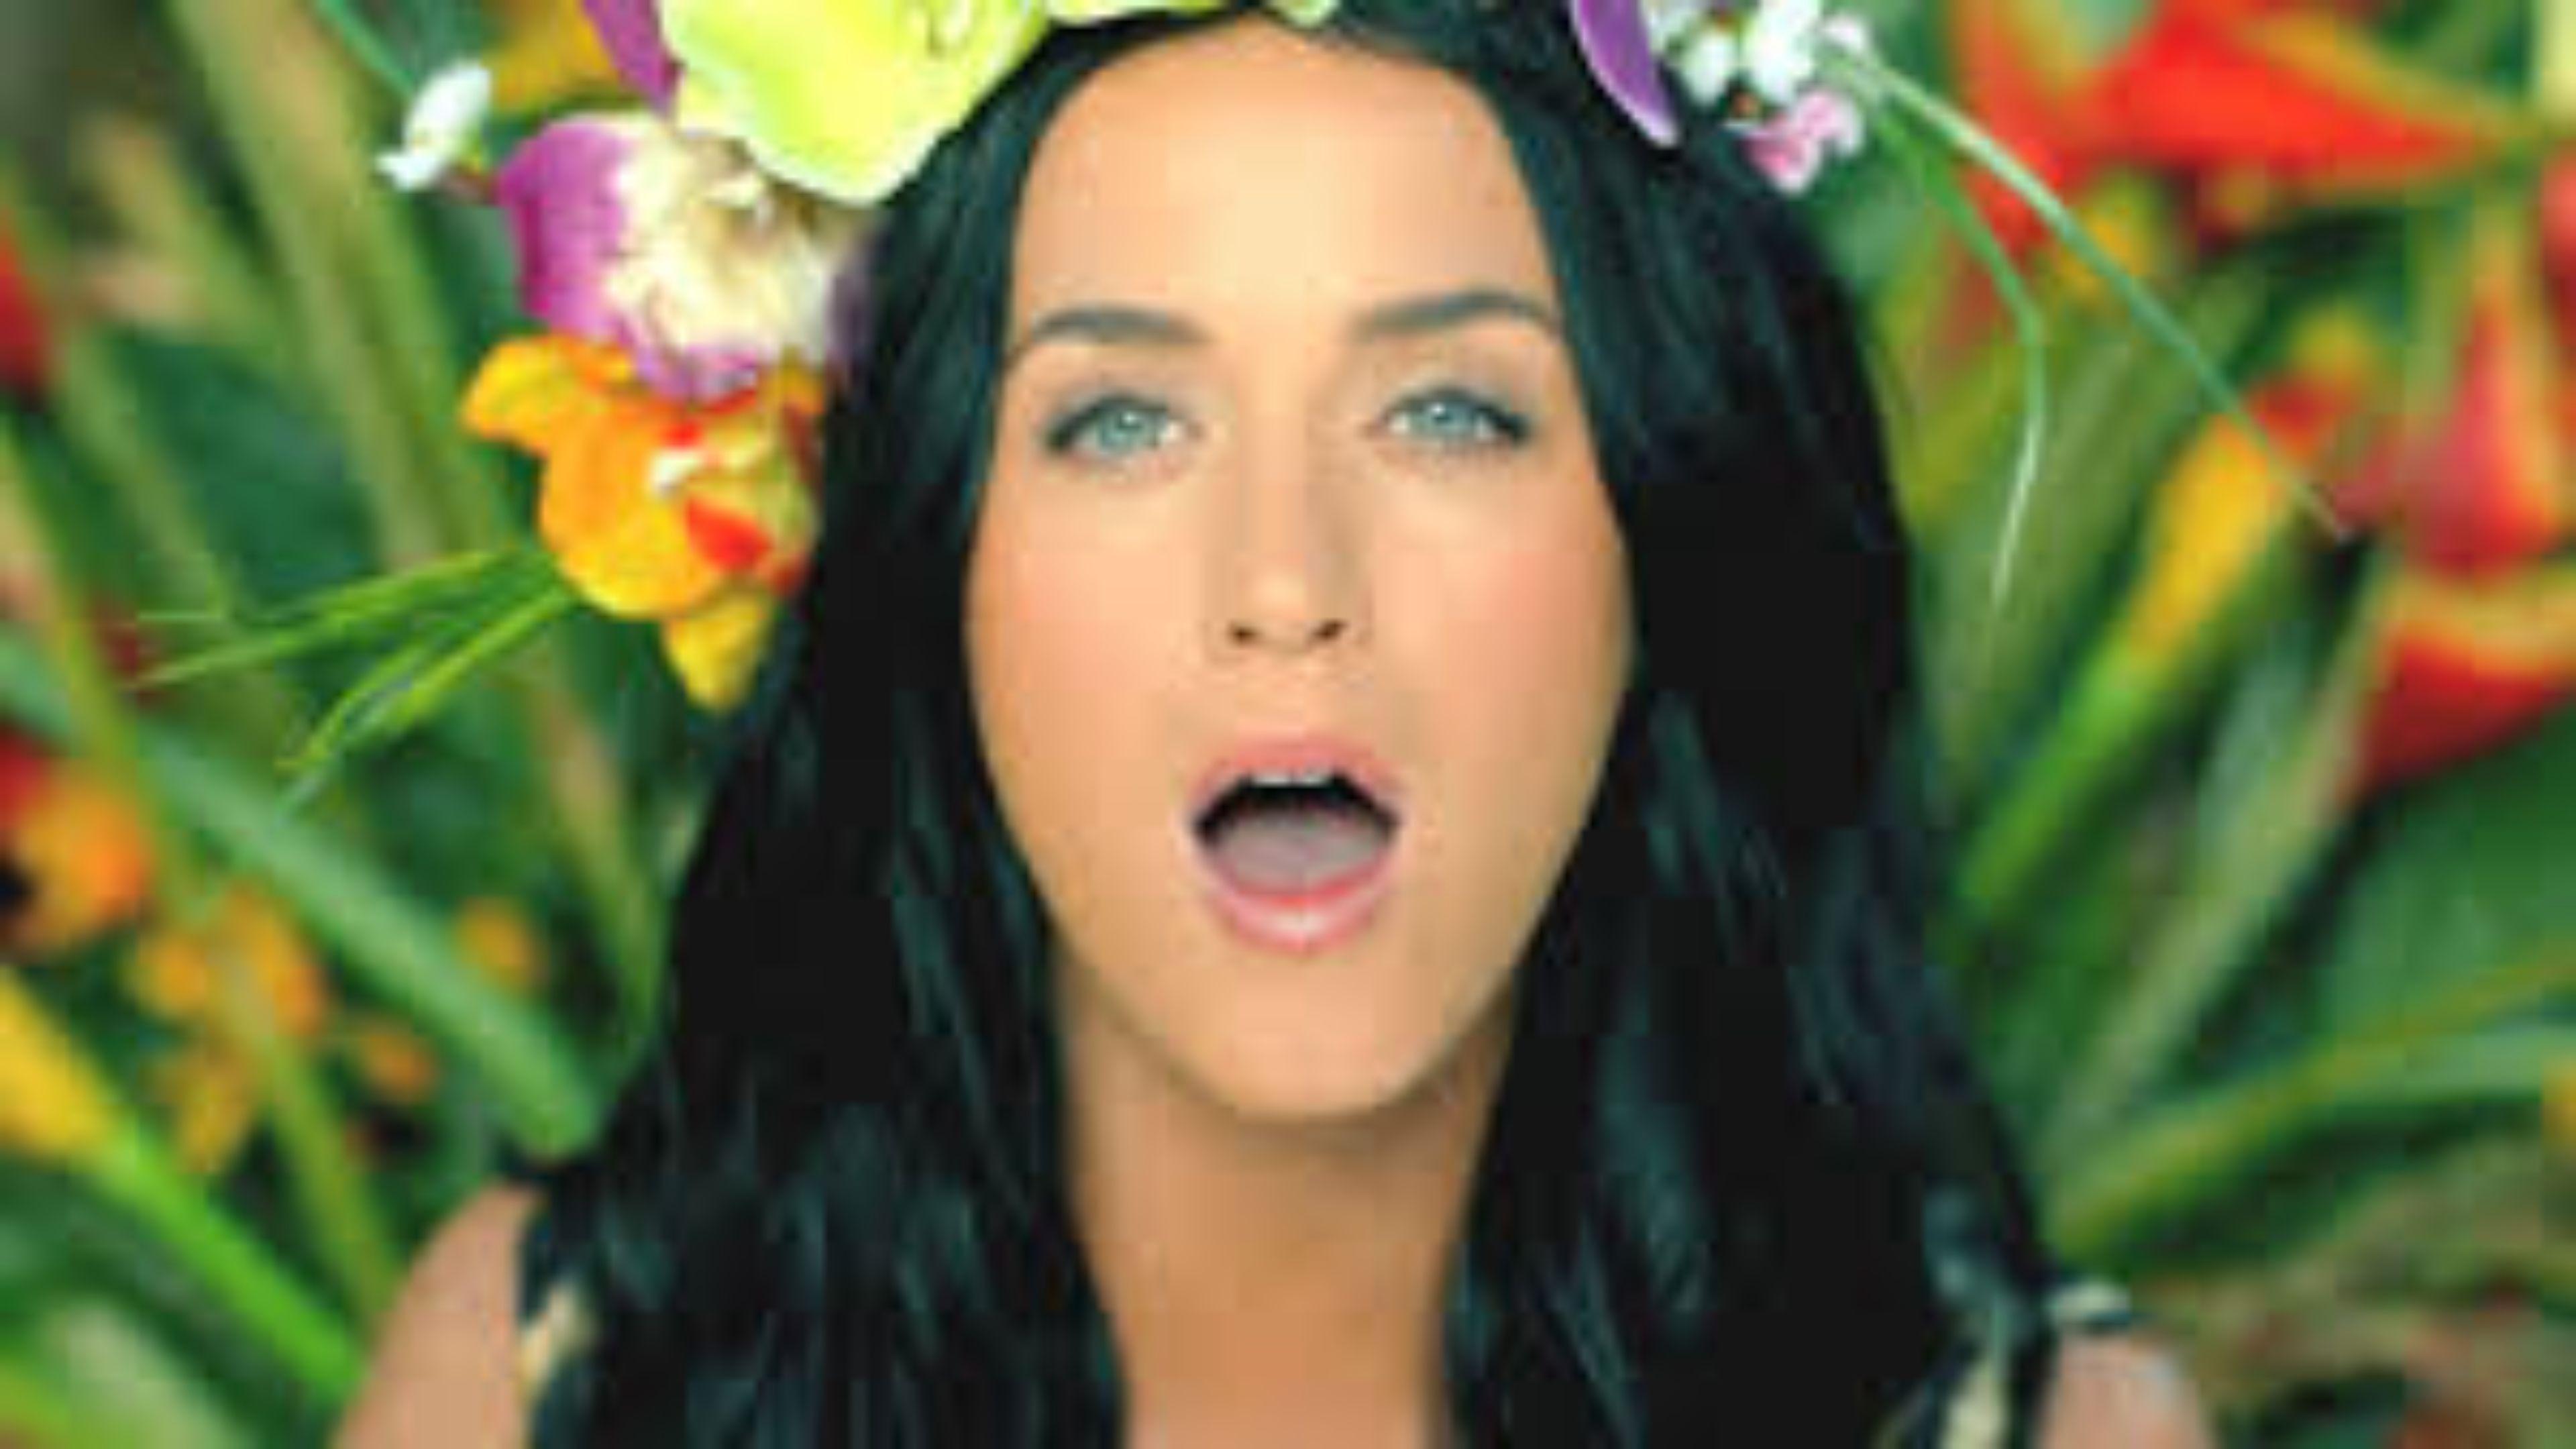 Free Download 4K Katy Perry Wallpaper. Free 4K Wallpaper